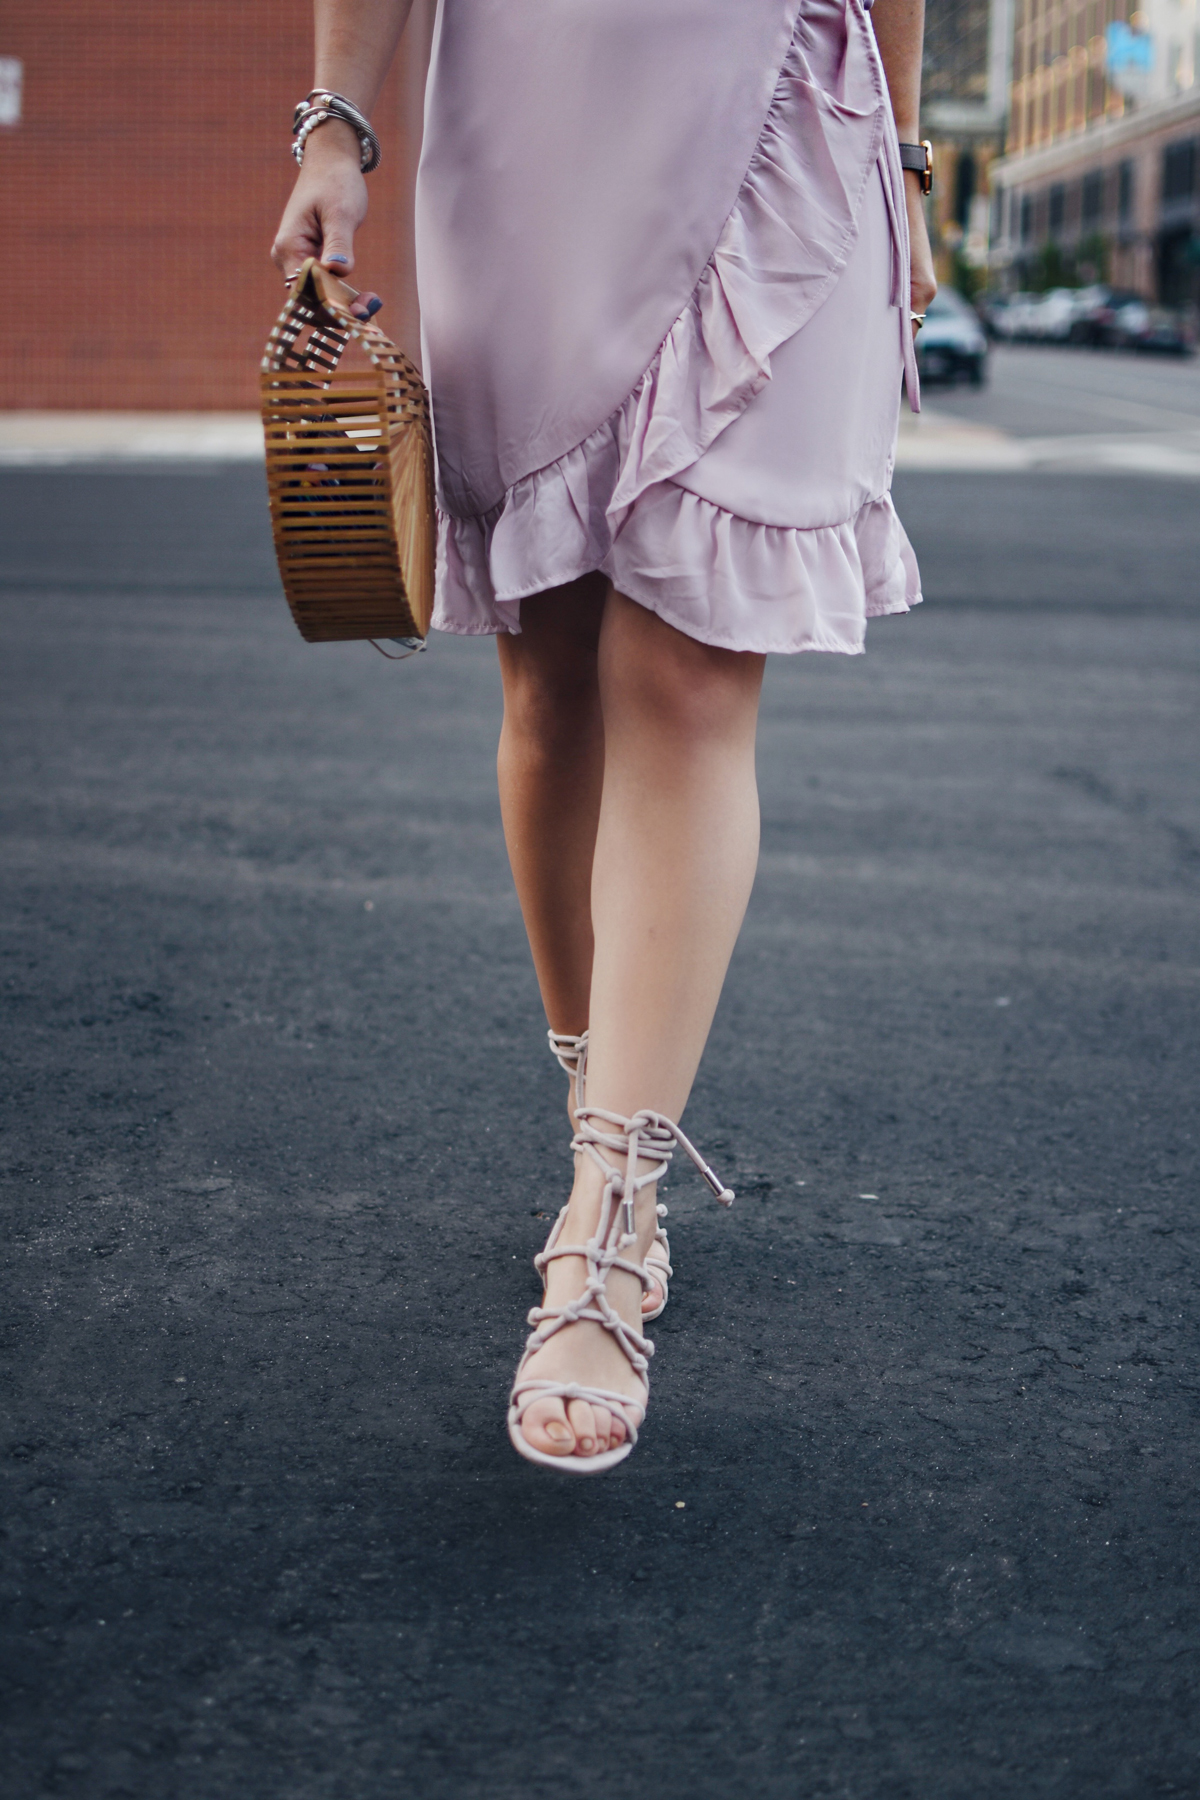 Carolina Hellal of Chic Talk wearing a Lioness caliente ruffle dress via Shopbop, Cultgaia bag and Rebecca Minkoff sandals.